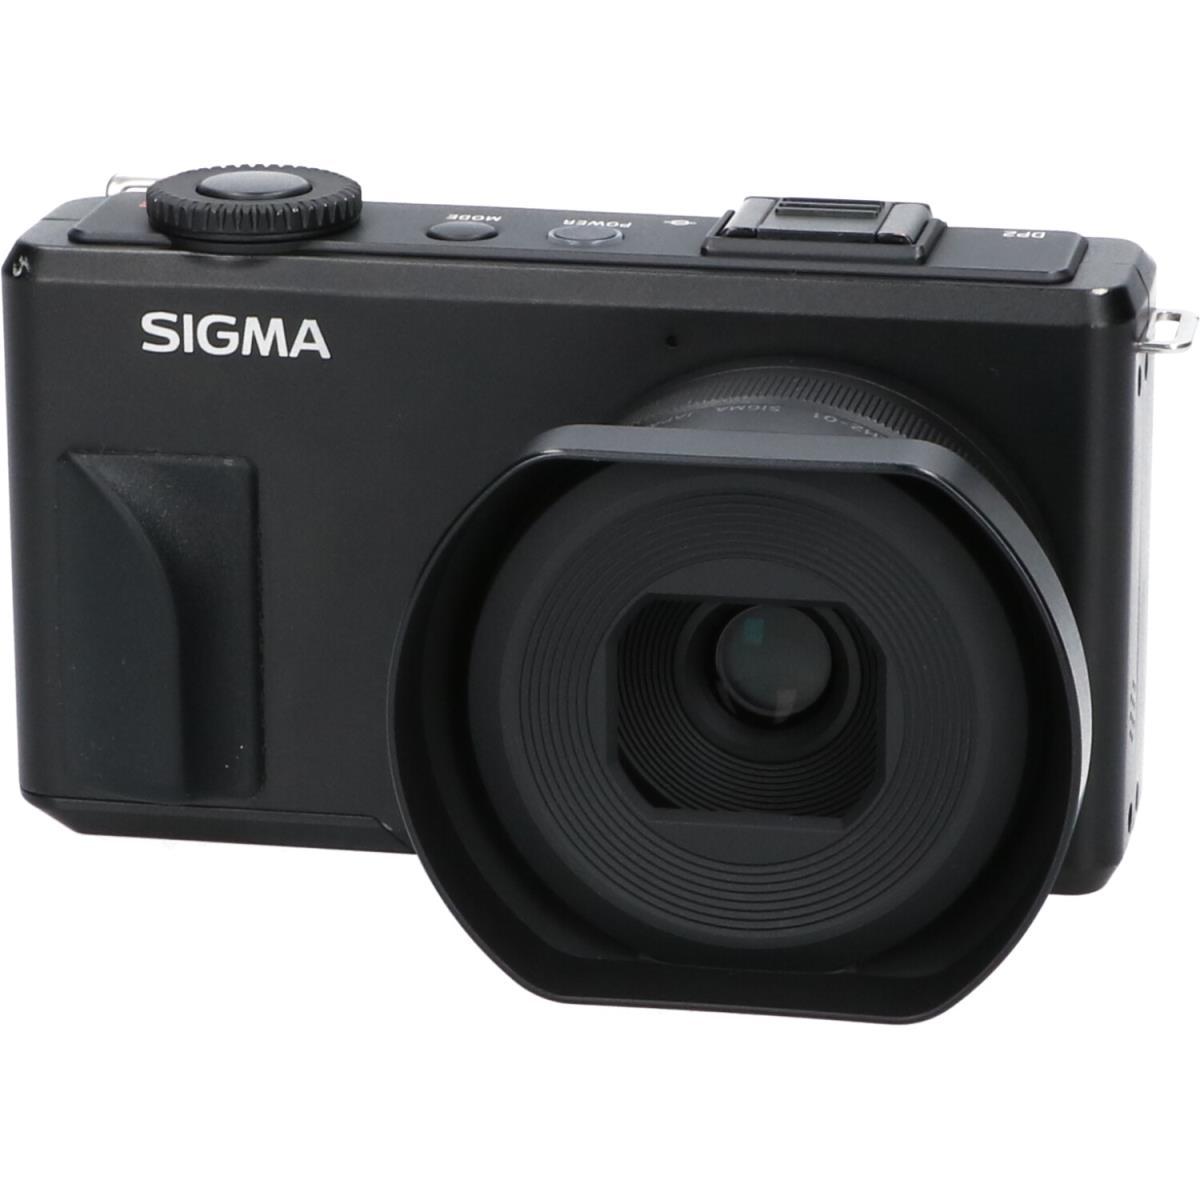 SIGMA DP2 MERRILL【ビューファインダー他付属品】 - デジタルカメラ